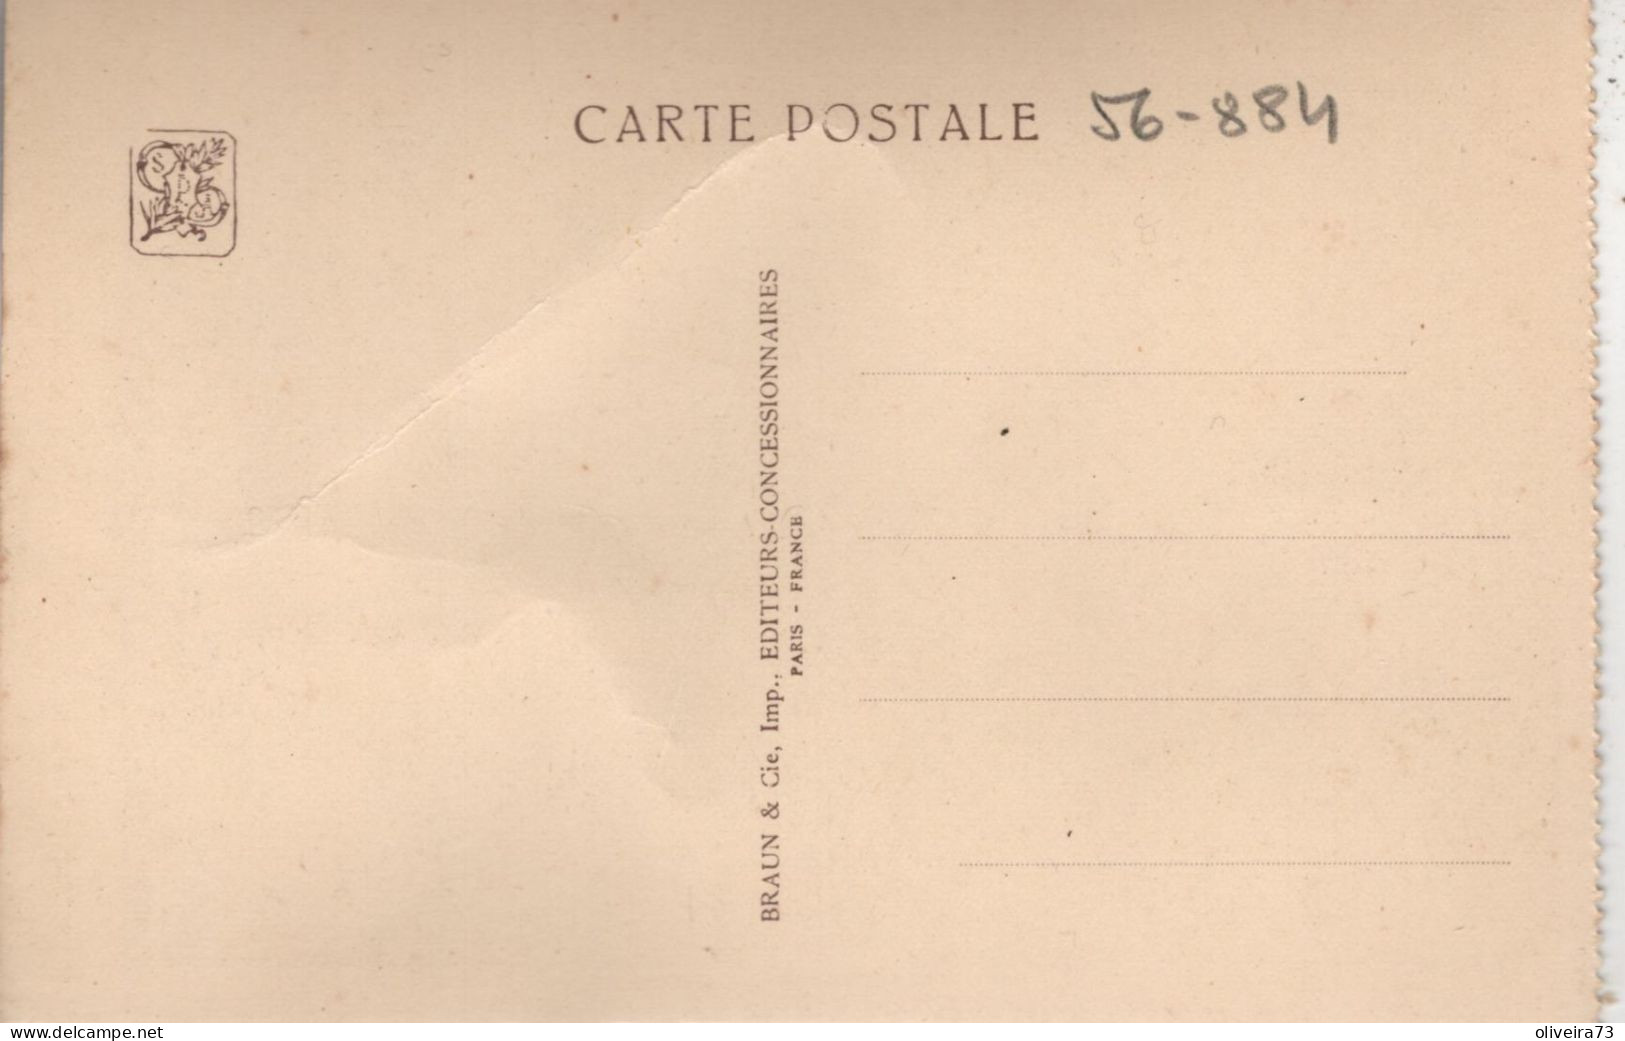 PARIS - Exposition Coloniale International 1931  - Cameroun-Togo -Grand Palais - Exhibitions